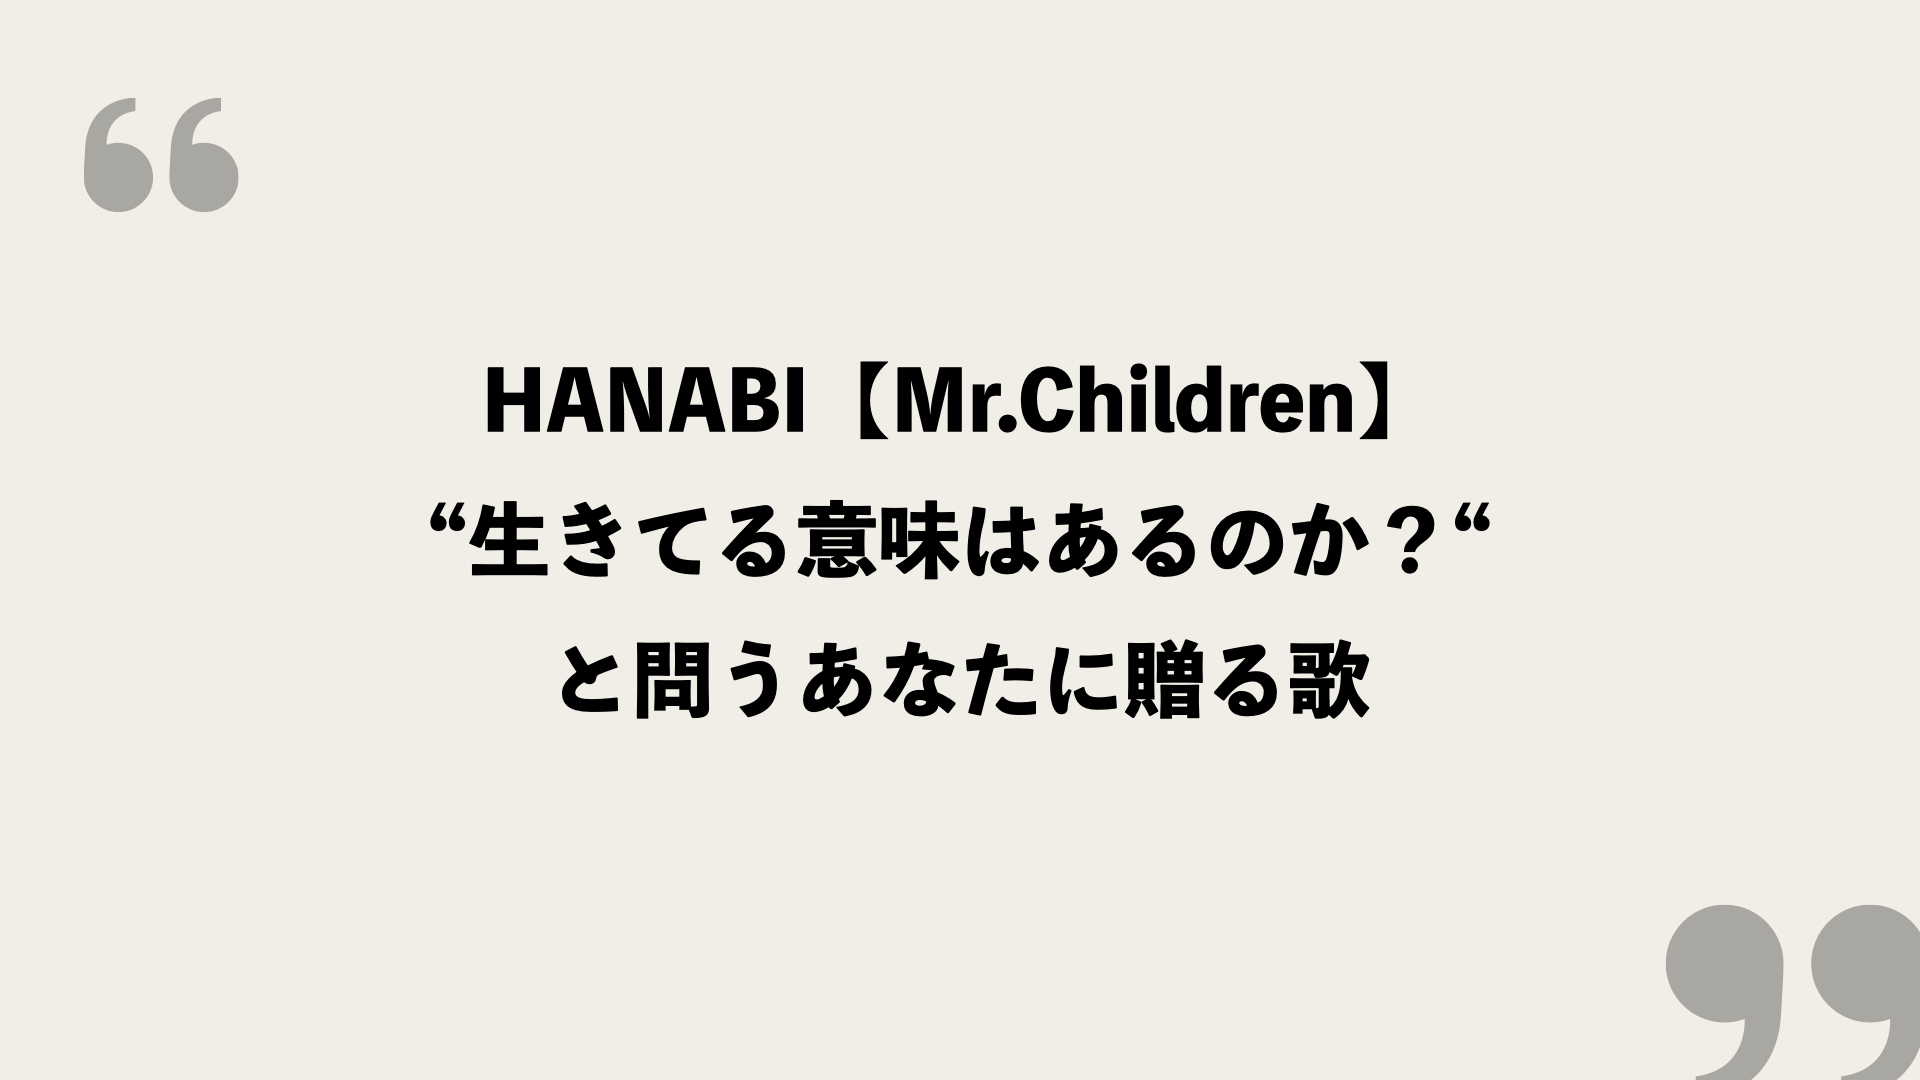 Hanabi Mr Children 歌詞の意味を考察 生きてる意味はあるのか と問うあなたに贈る歌 Framu Media